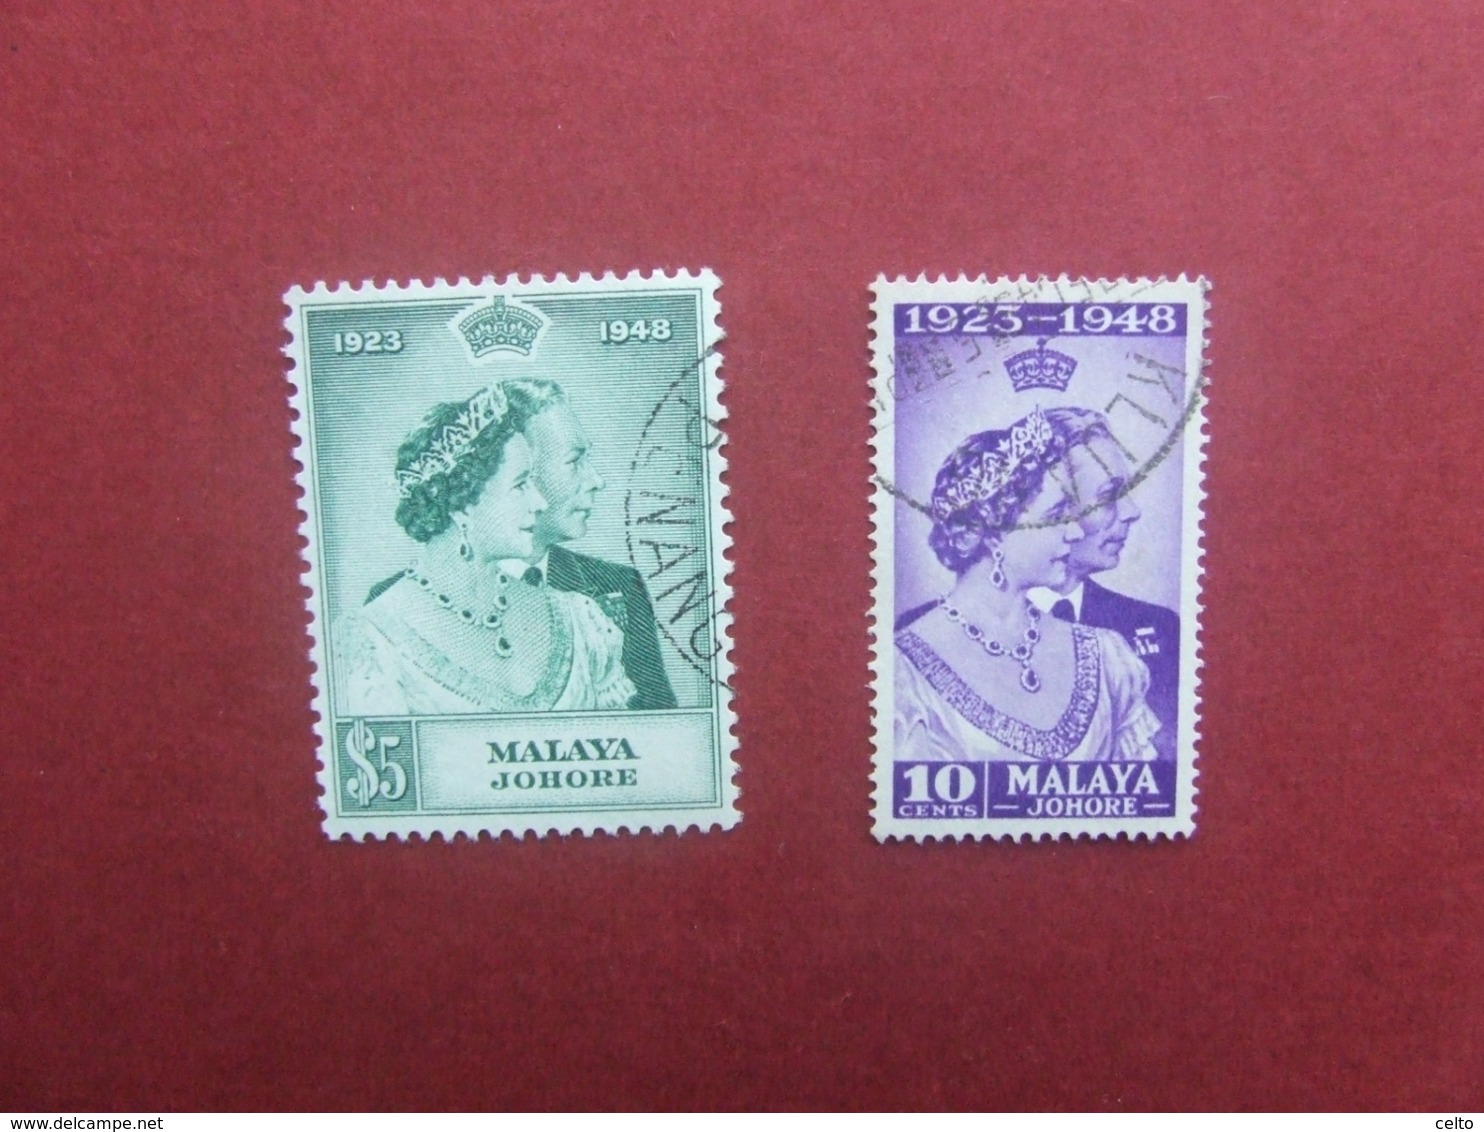 1948 MALAYA JOHORE USED SET - Johore